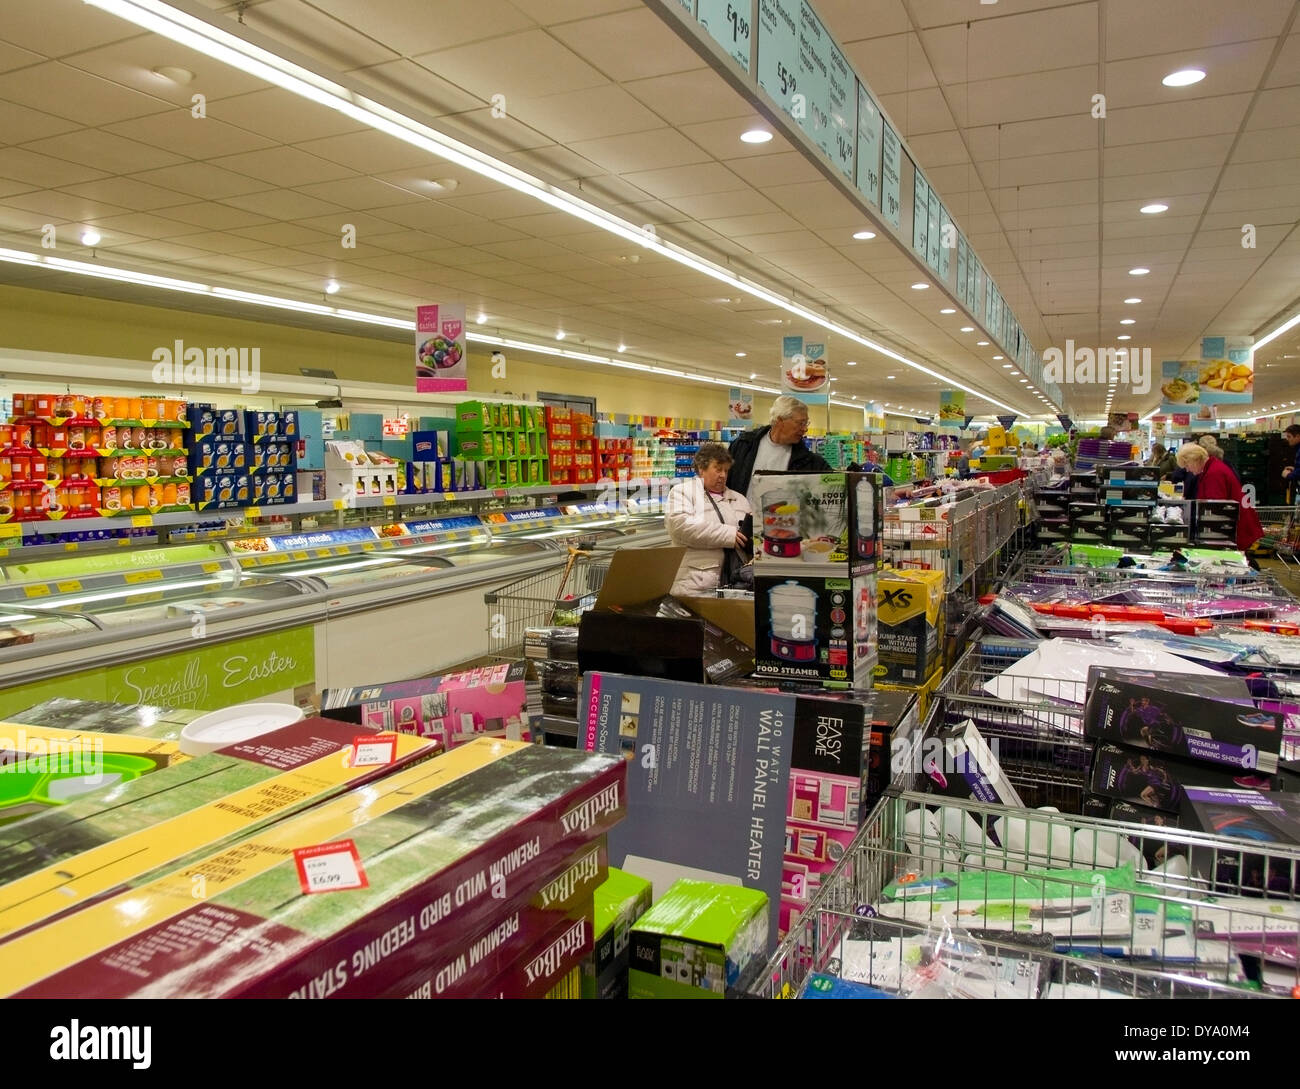 Aldi discount supermarket offers Stock Photo